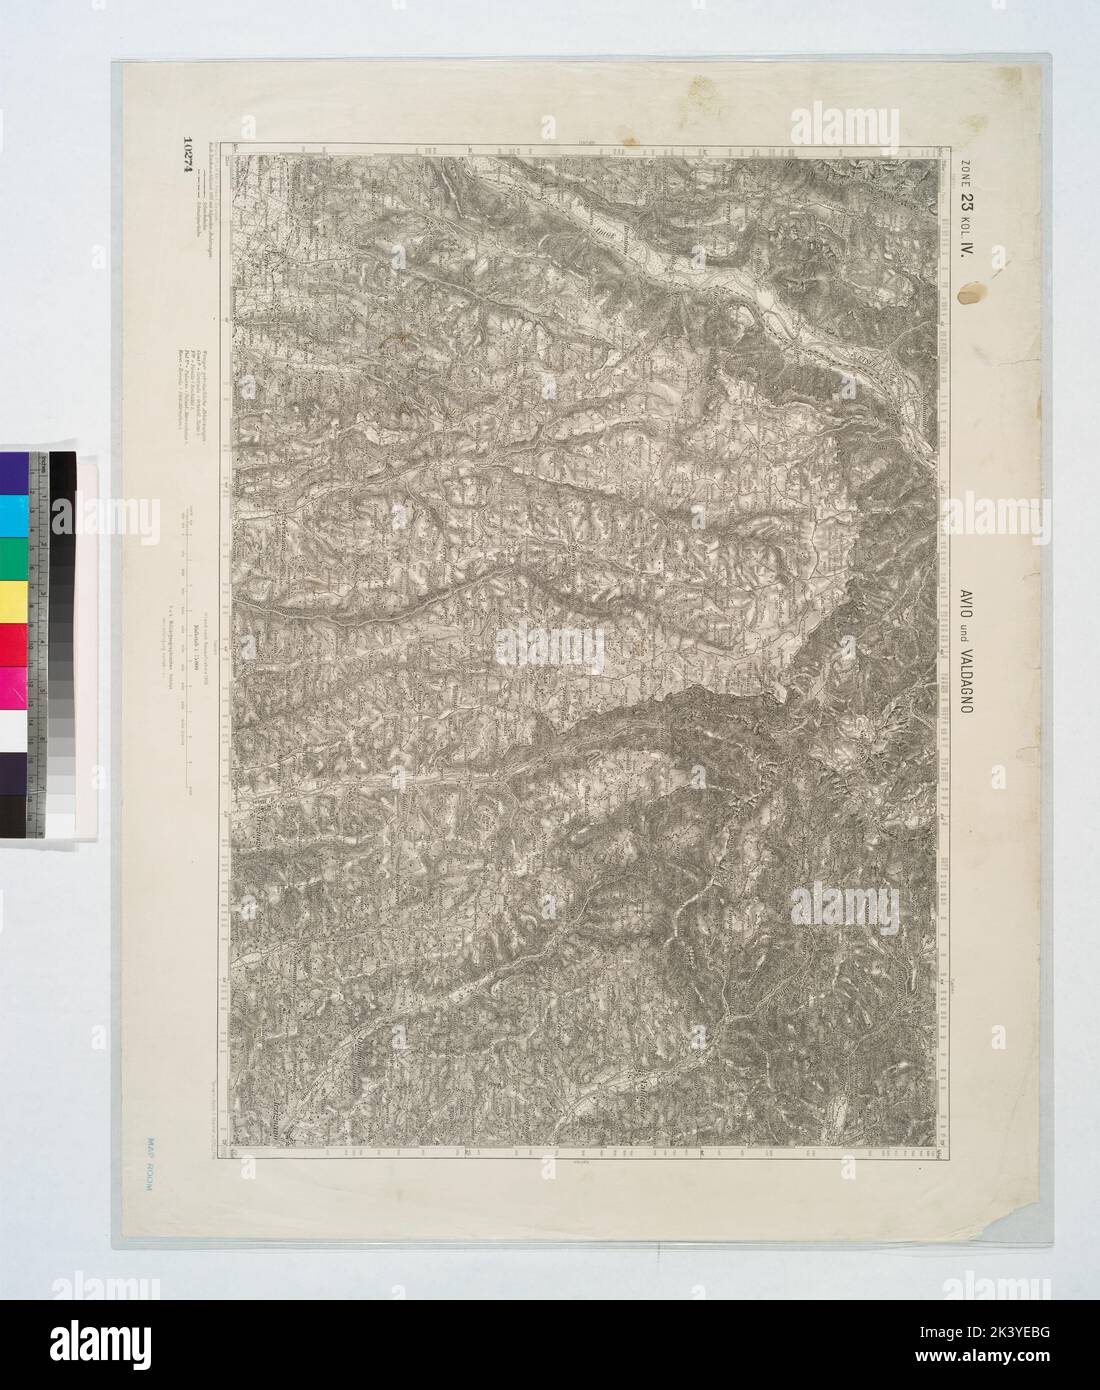 Avio und Valdagno. Cartographic. Maps, Topographic maps. 1910. Lionel Pincus and Princess Firyal Map Division Stock Photo